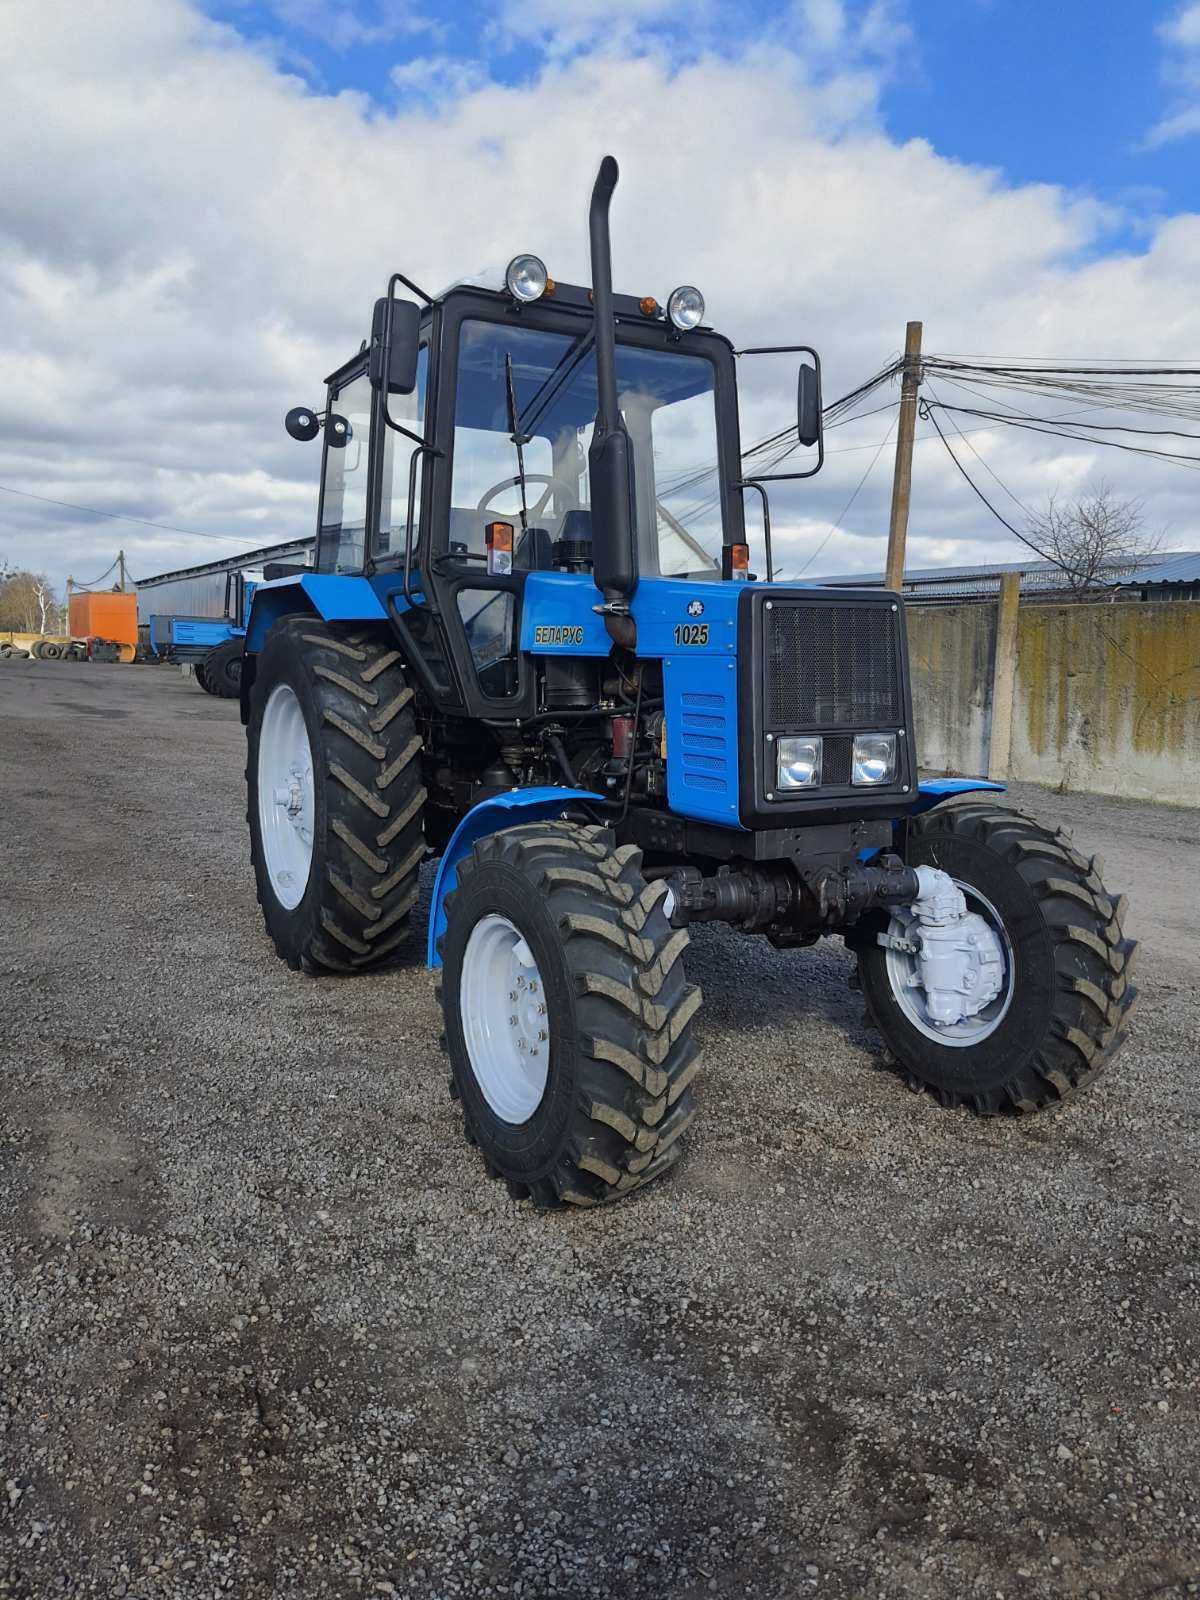 Продам трактор 1025, МТЗ 1025, Беларус-1025, 2008р.